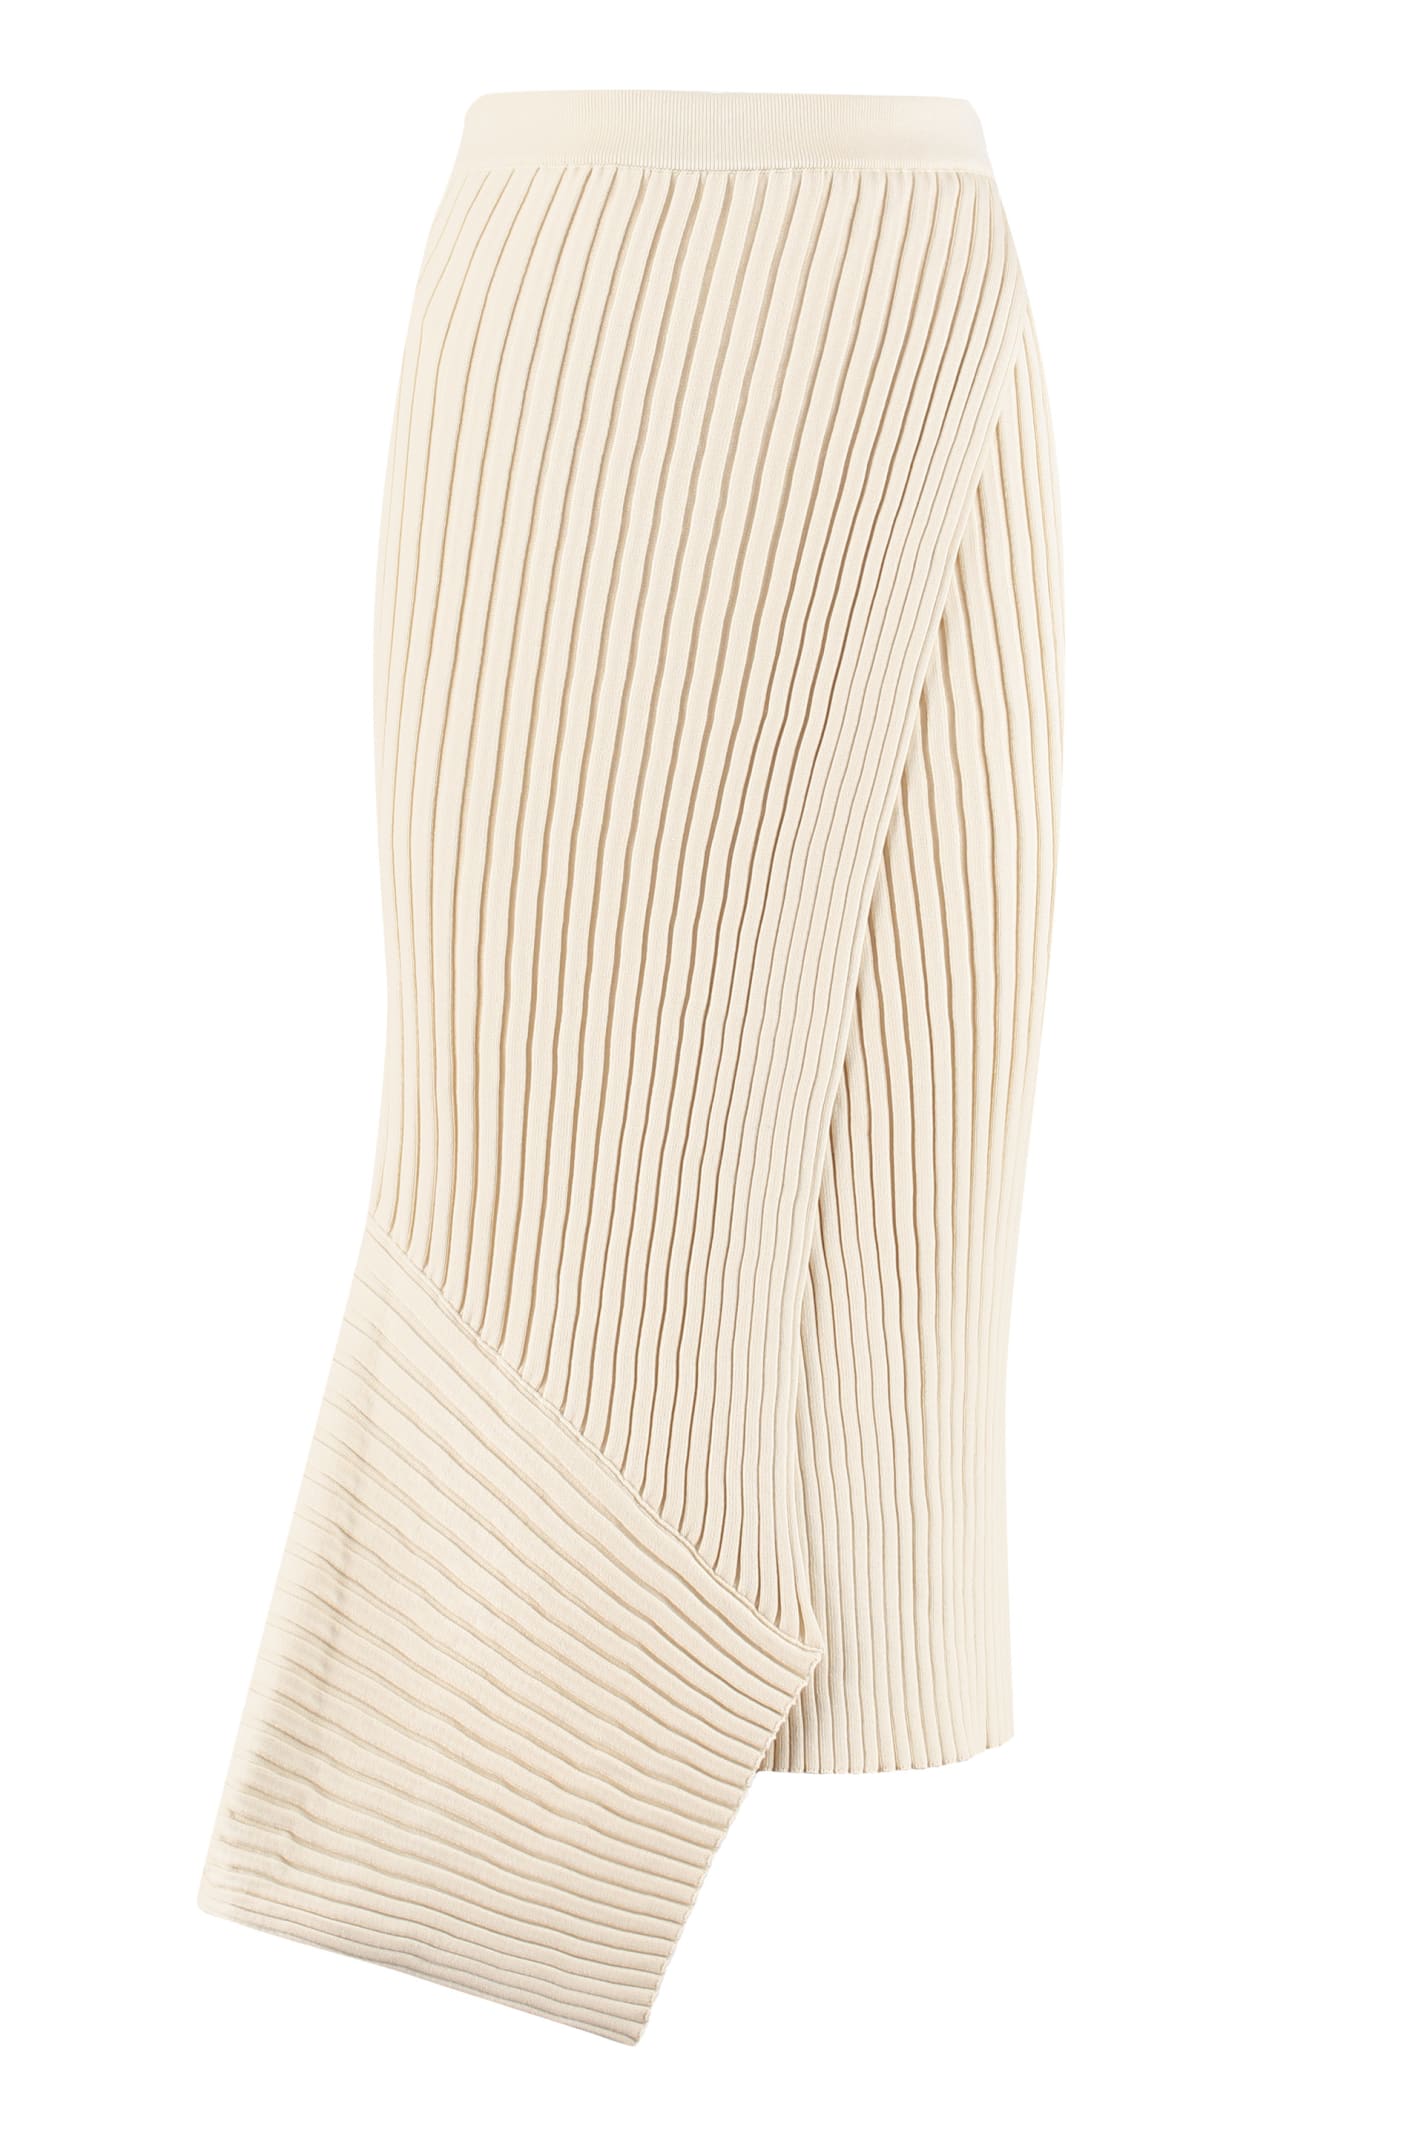 Stella McCartney Ribbed Knit Skirt